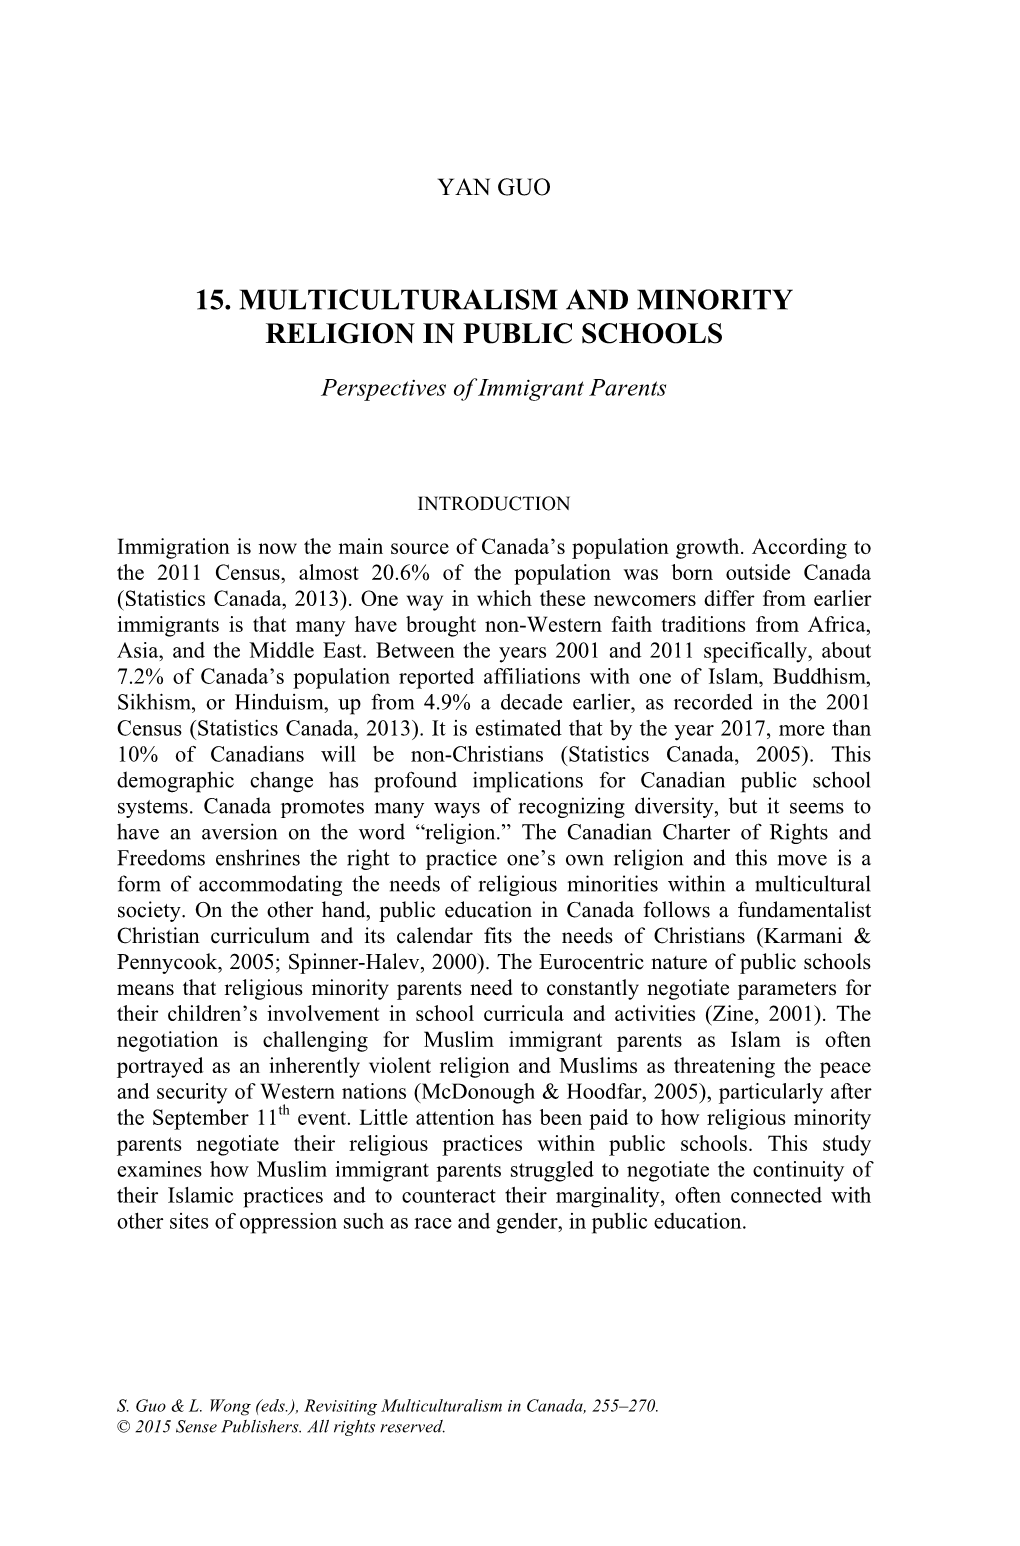 15. Multiculturalism and Minority Religion in Public Schools